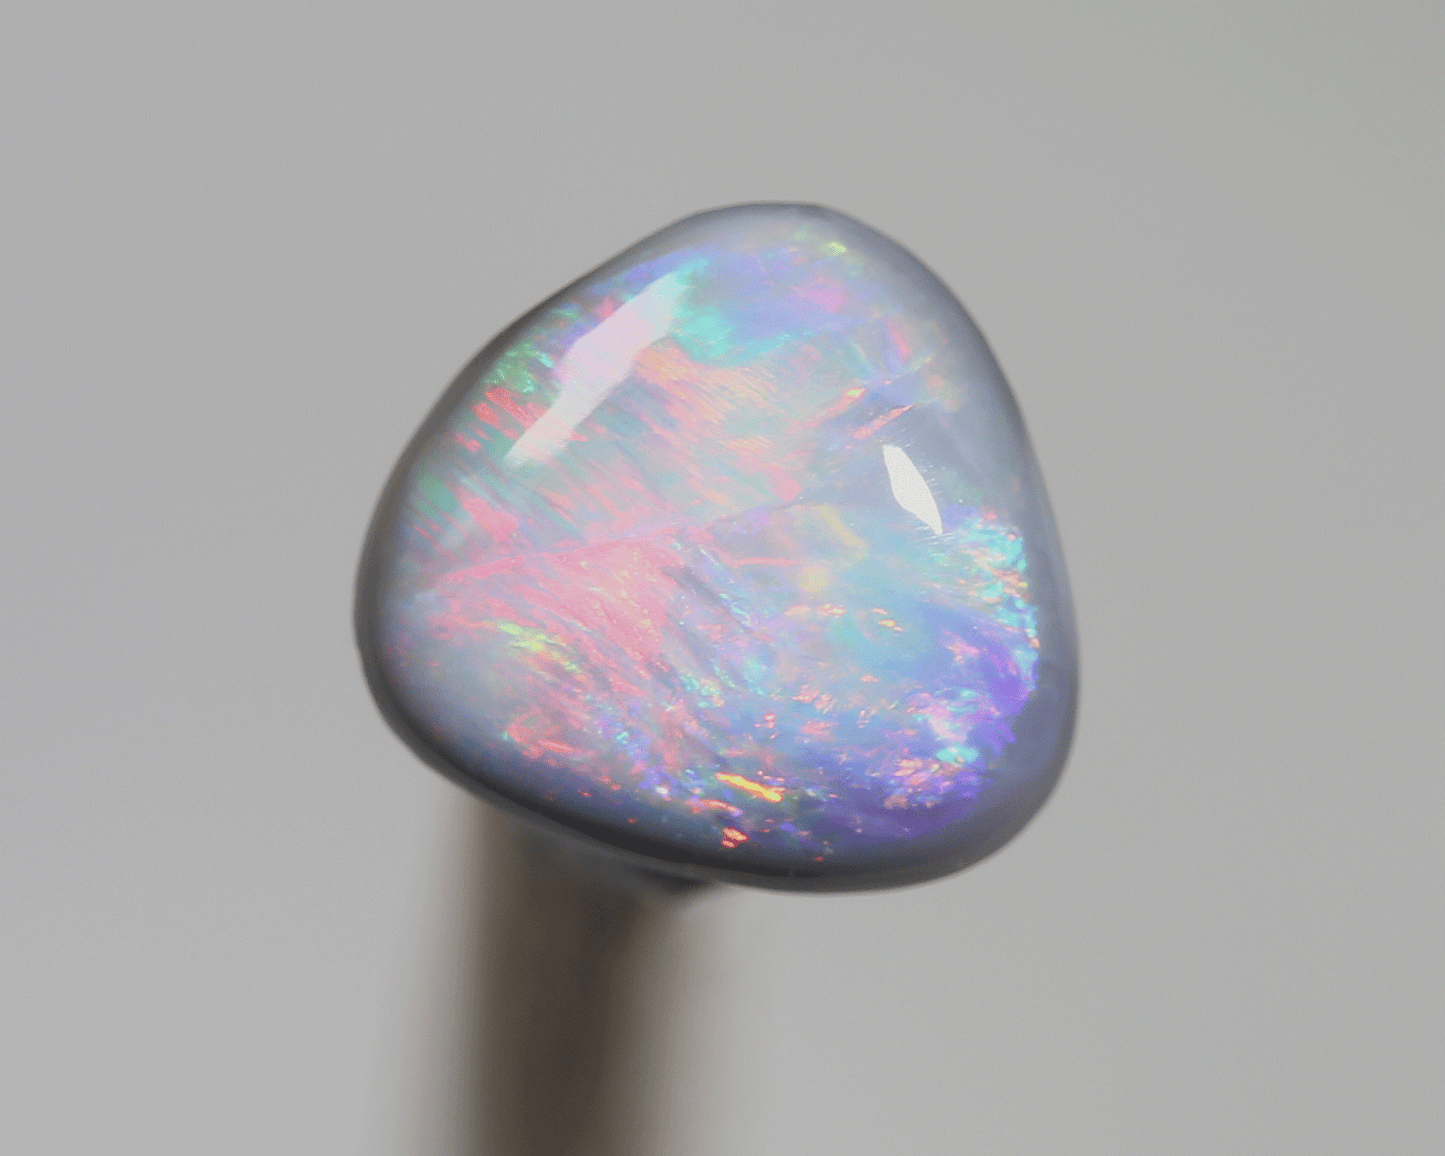 0.71 ct dark opal